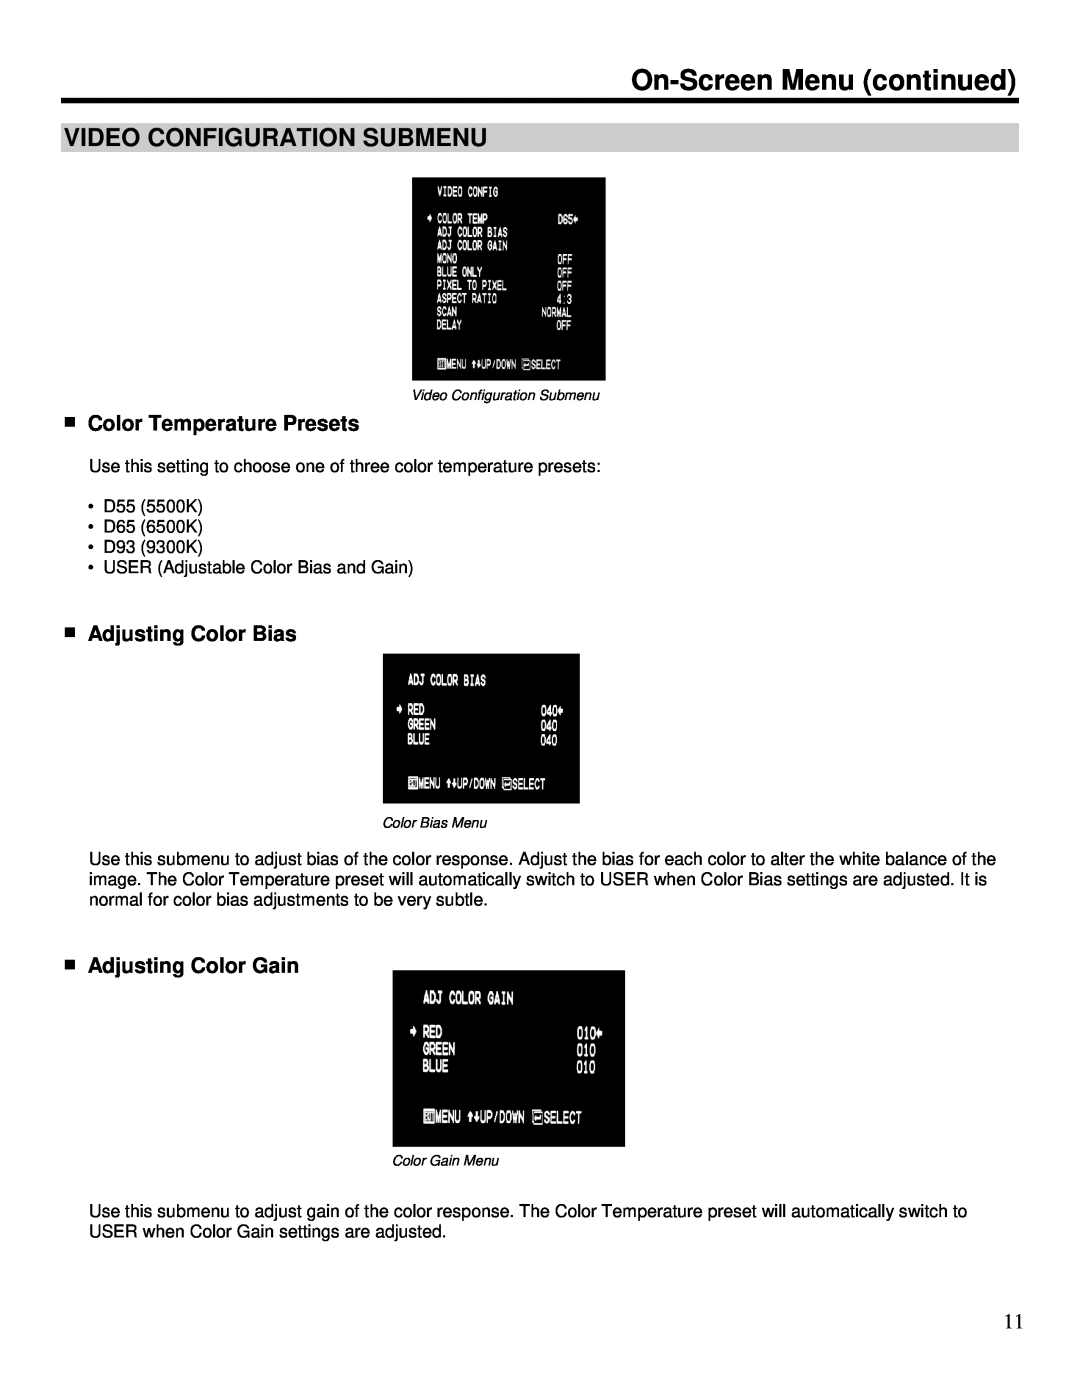 Marshall electronic V-R151DP-AFHD manual Video Configuration Submenu, Color Temperature Presets, Adjusting Color Bias 